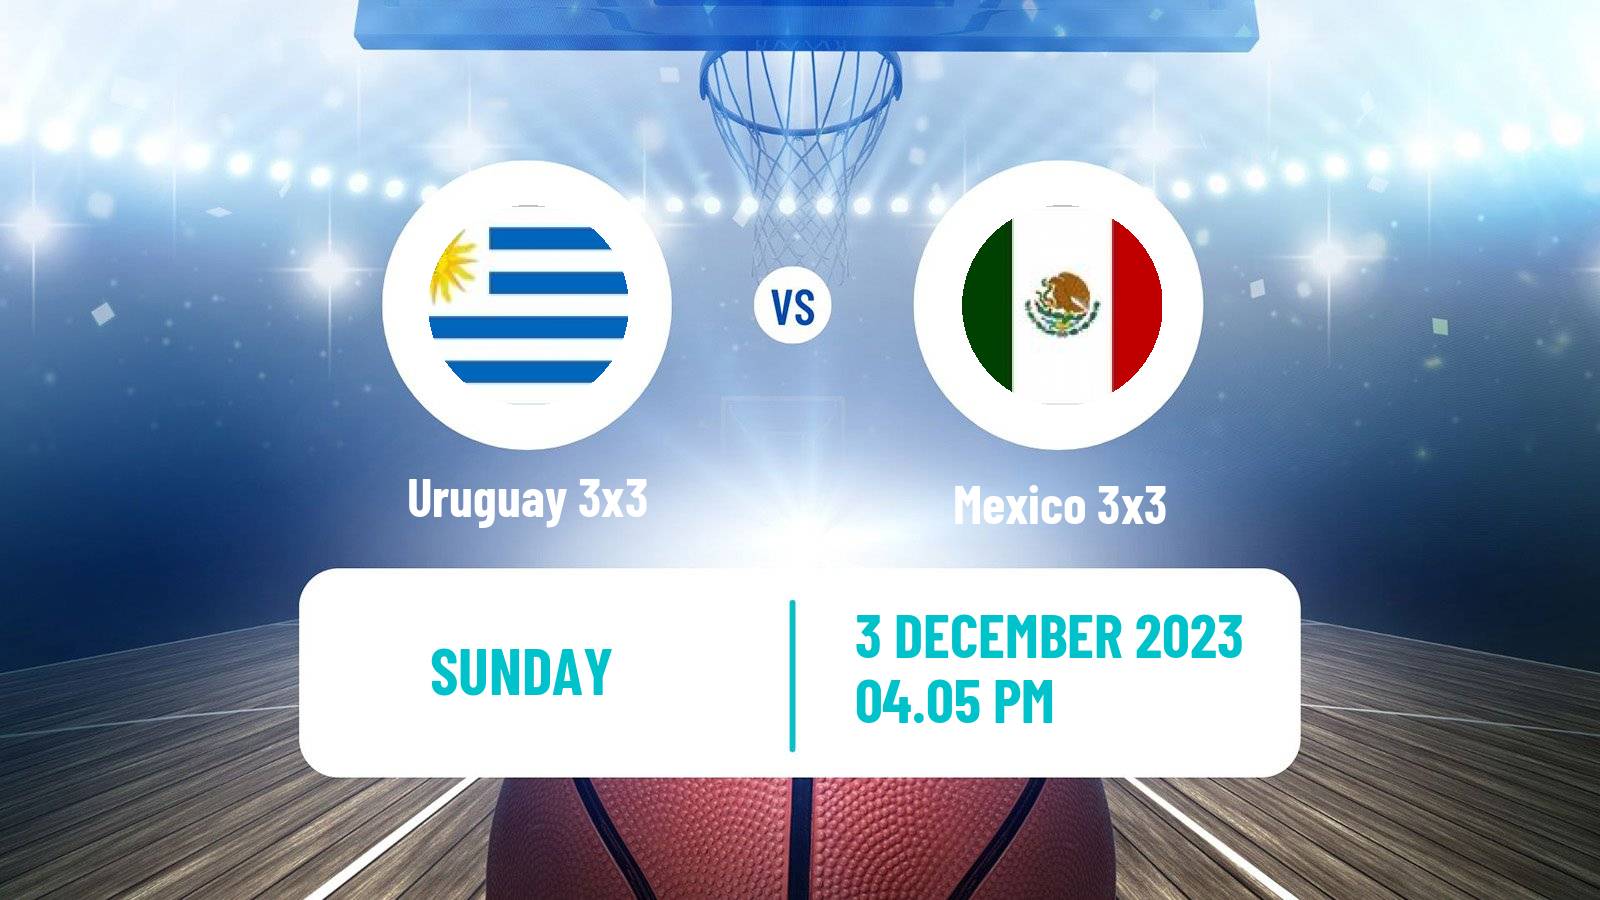 Basketball Americup 3x3 Uruguay 3x3 - Mexico 3x3